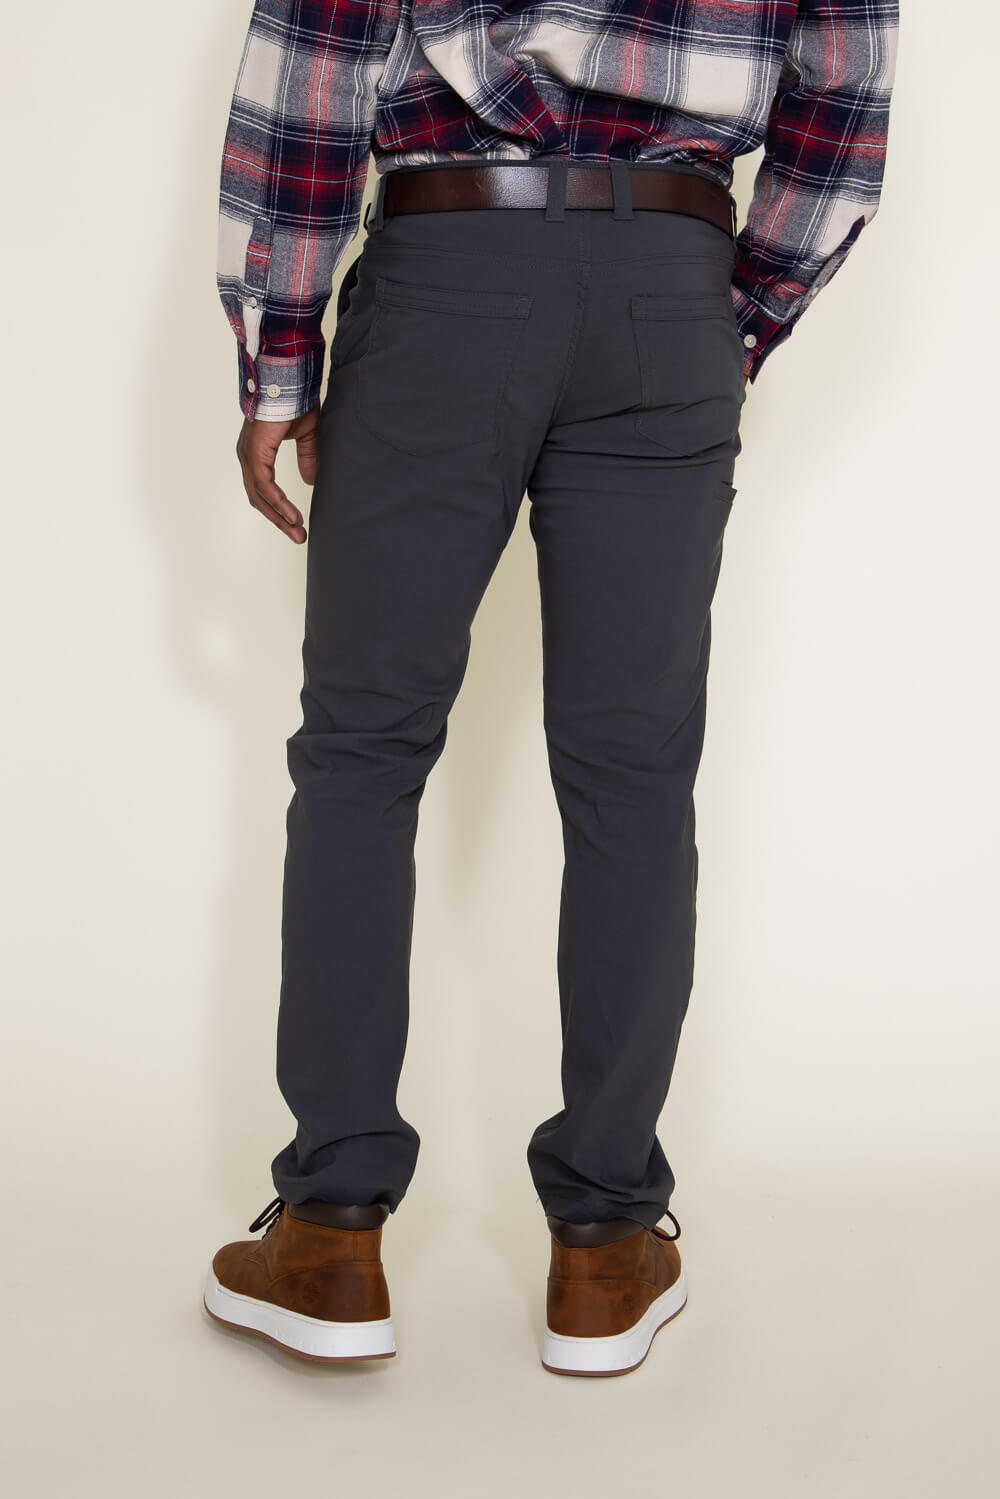 Union Five Pocket Comfort Twill Pants for Men in Black